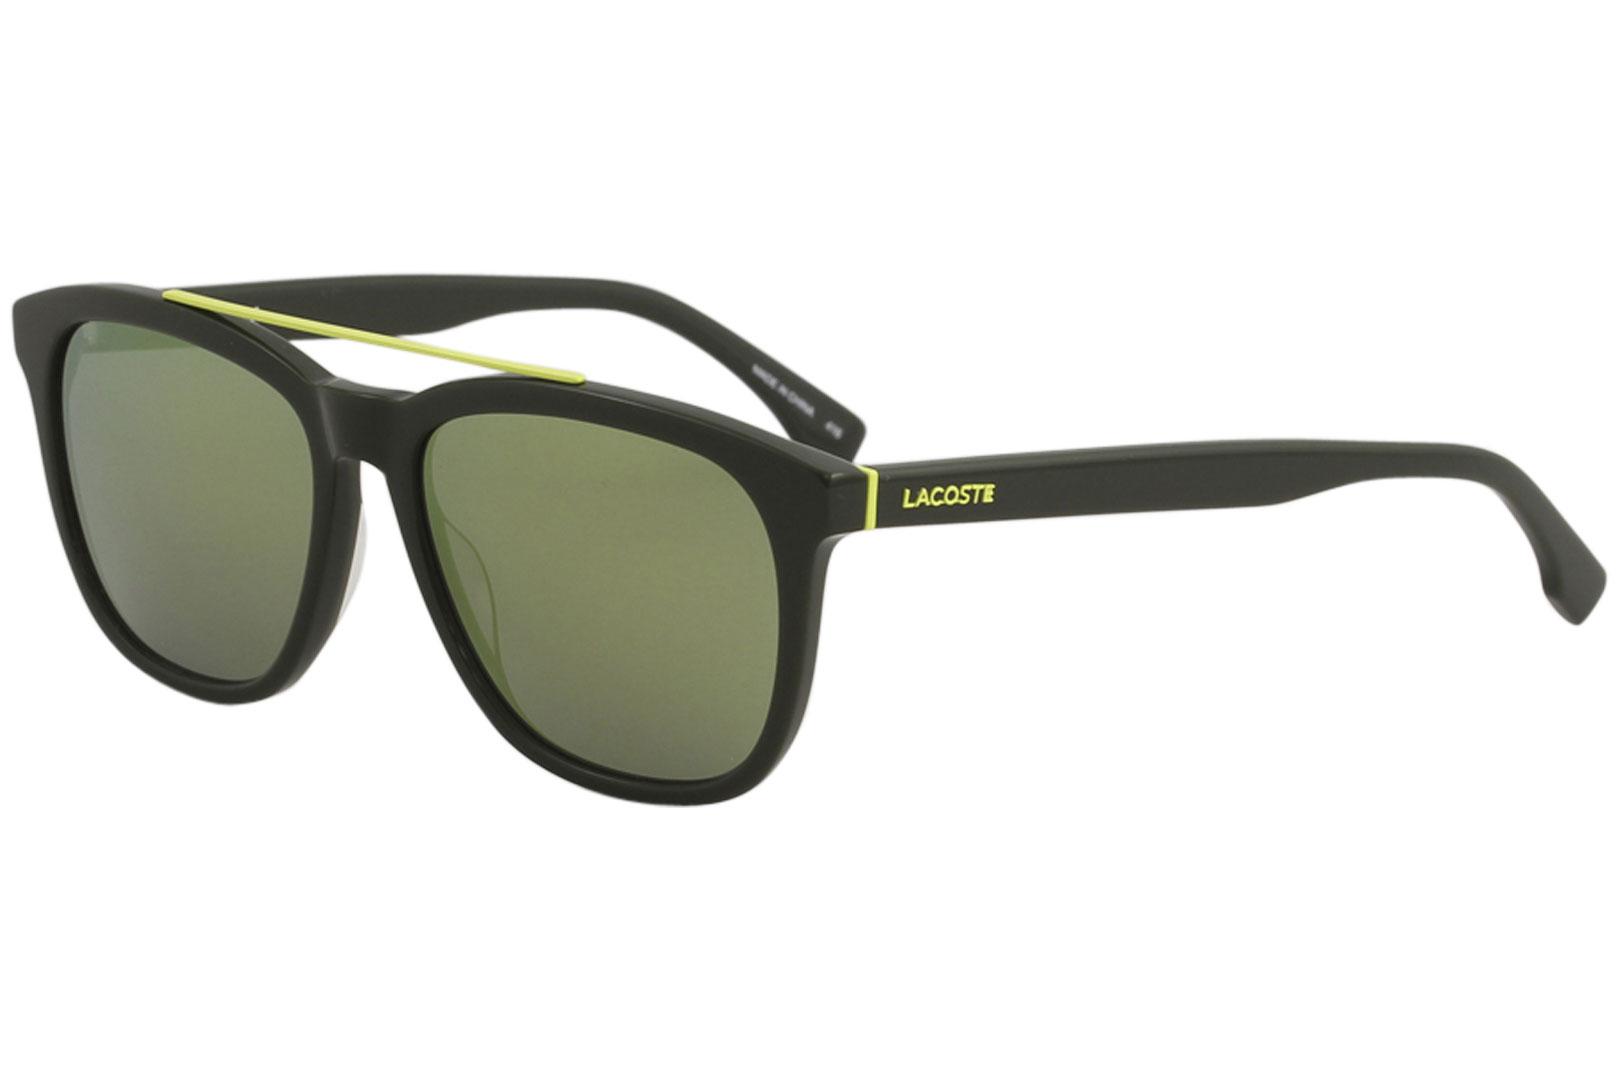 Lacoste Men's L822S L/822/S Fashion Pilot Sunglasses - Green/Grey Green Mirror   315 - Lens 55 Bridge 16 Temple 145mm